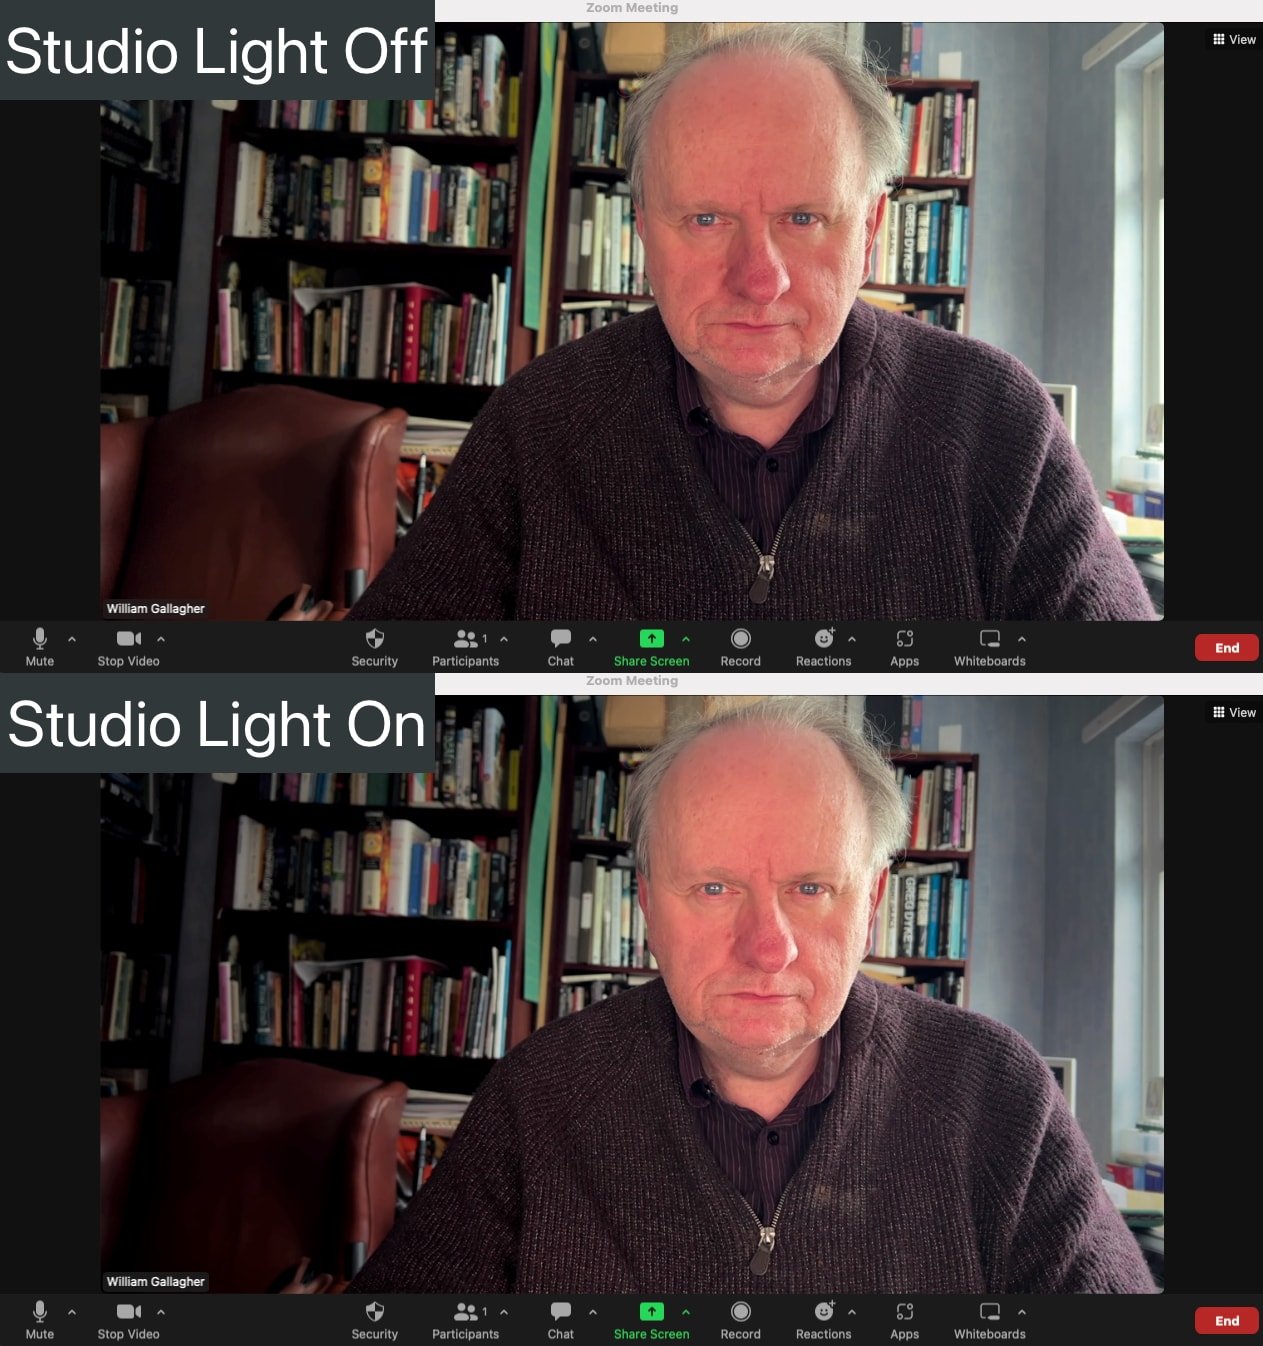 Compare: Studio Light off versus Studio Light on